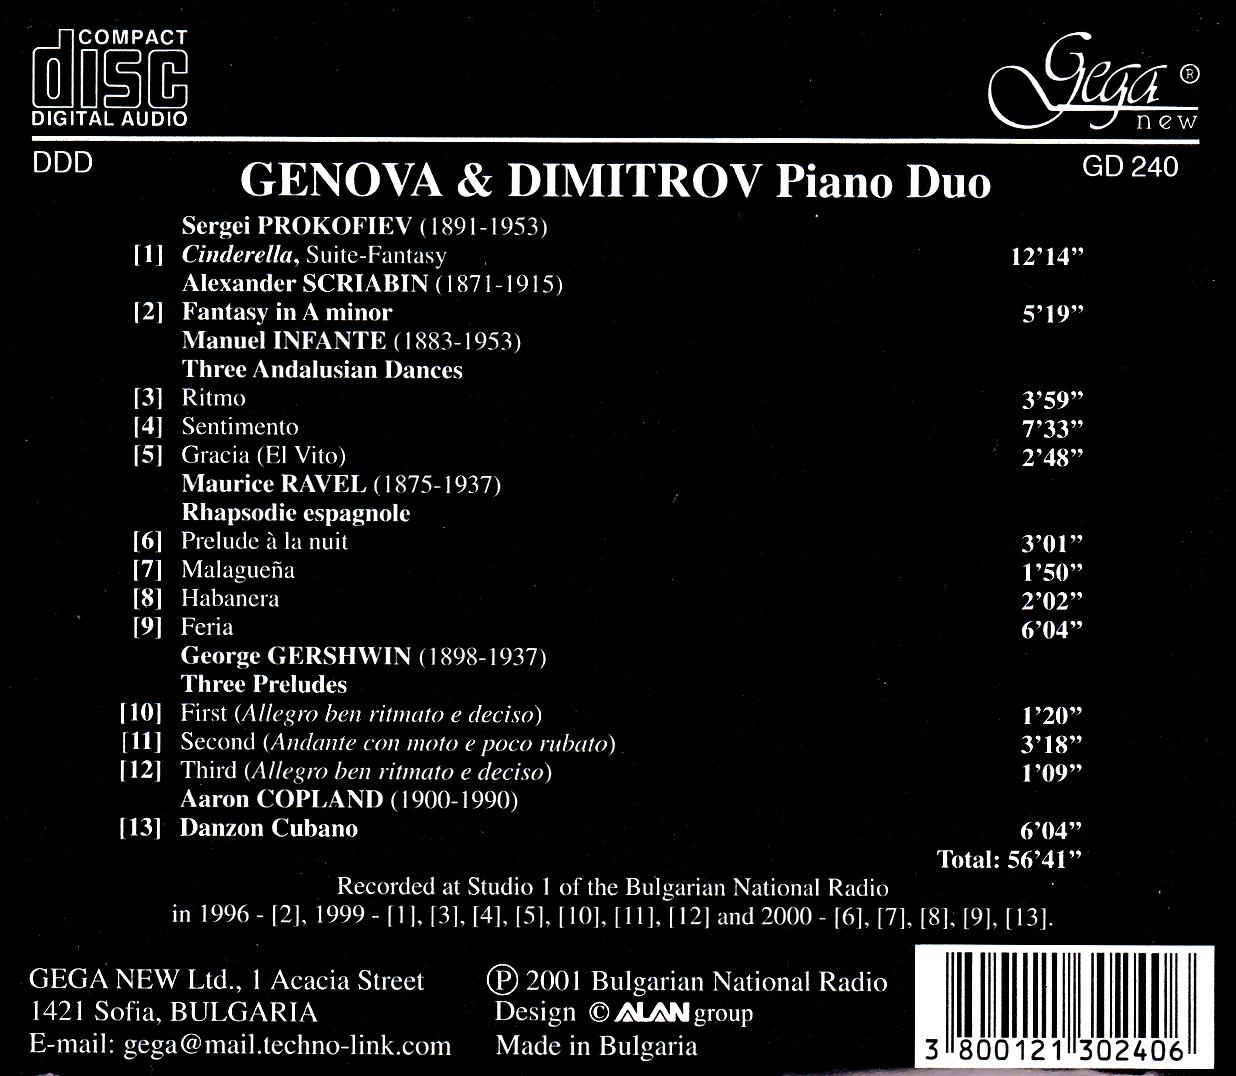 Genova & Dimitrov Piano Duo (Gega New GD 240) |Back Inlay